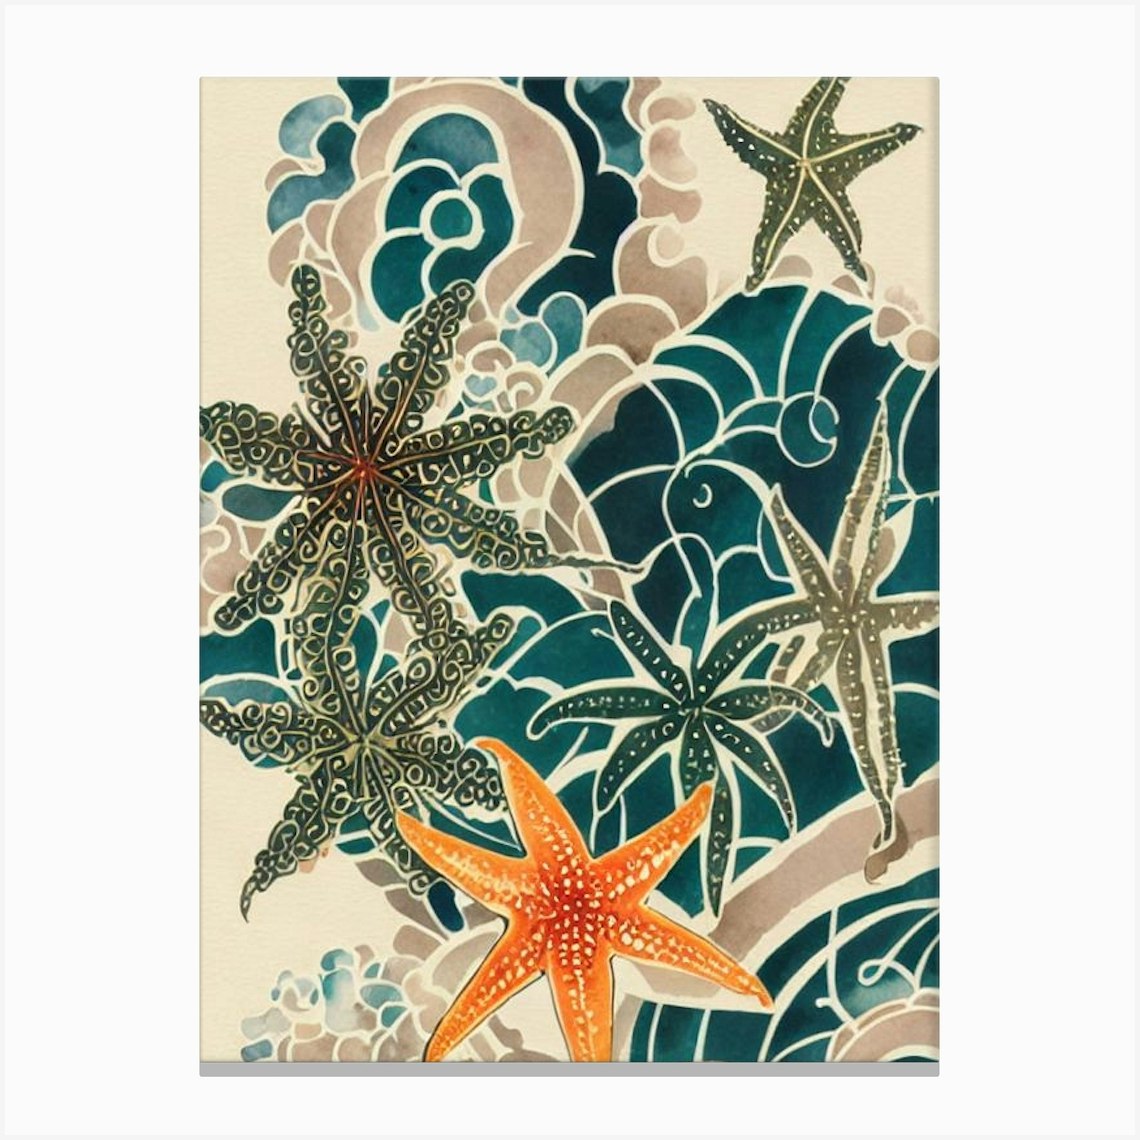 Acrylic Beach & Starfish Painting, Sponge Painting